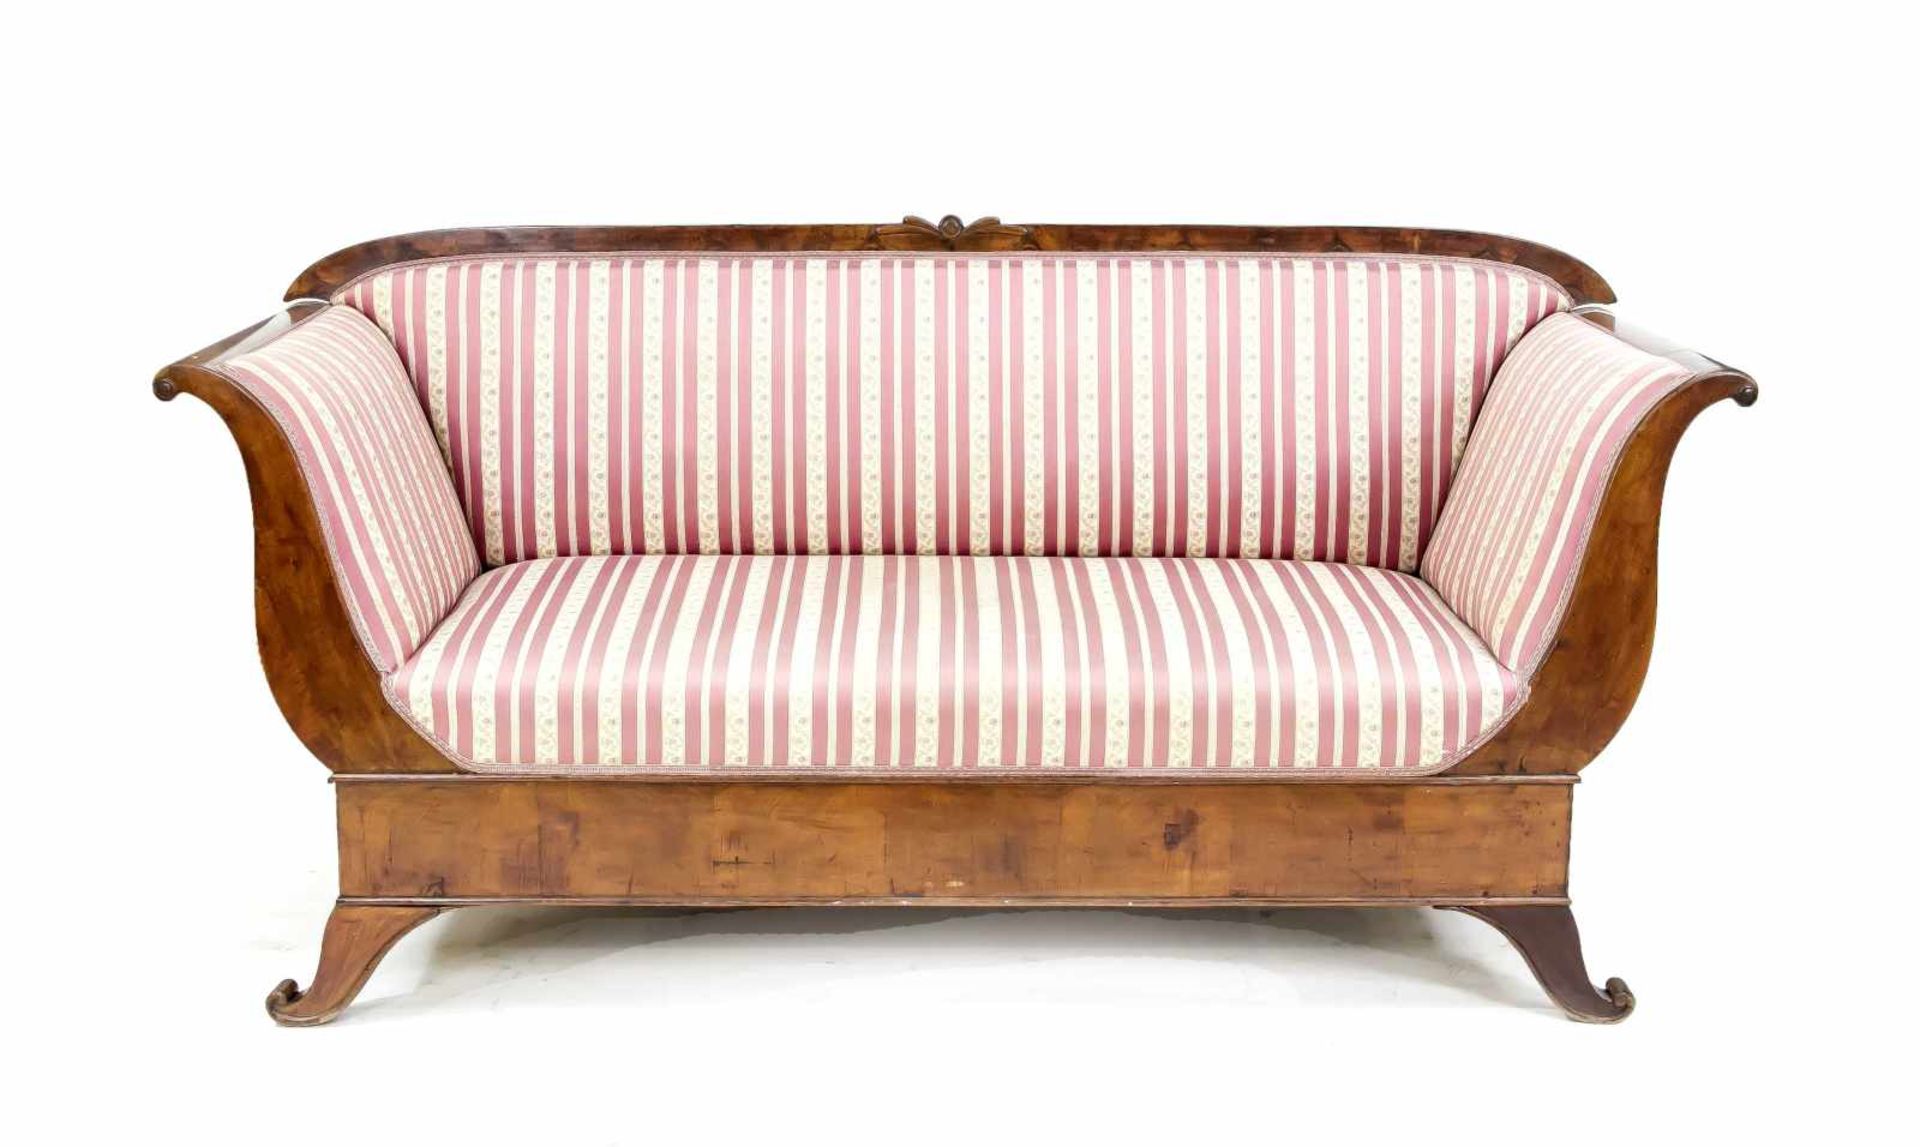 Biedermeier-Sofa um 1820, Nussbaum furniert, rosefarbener Streifenbezug, Polsterung, 97 x200 x 65